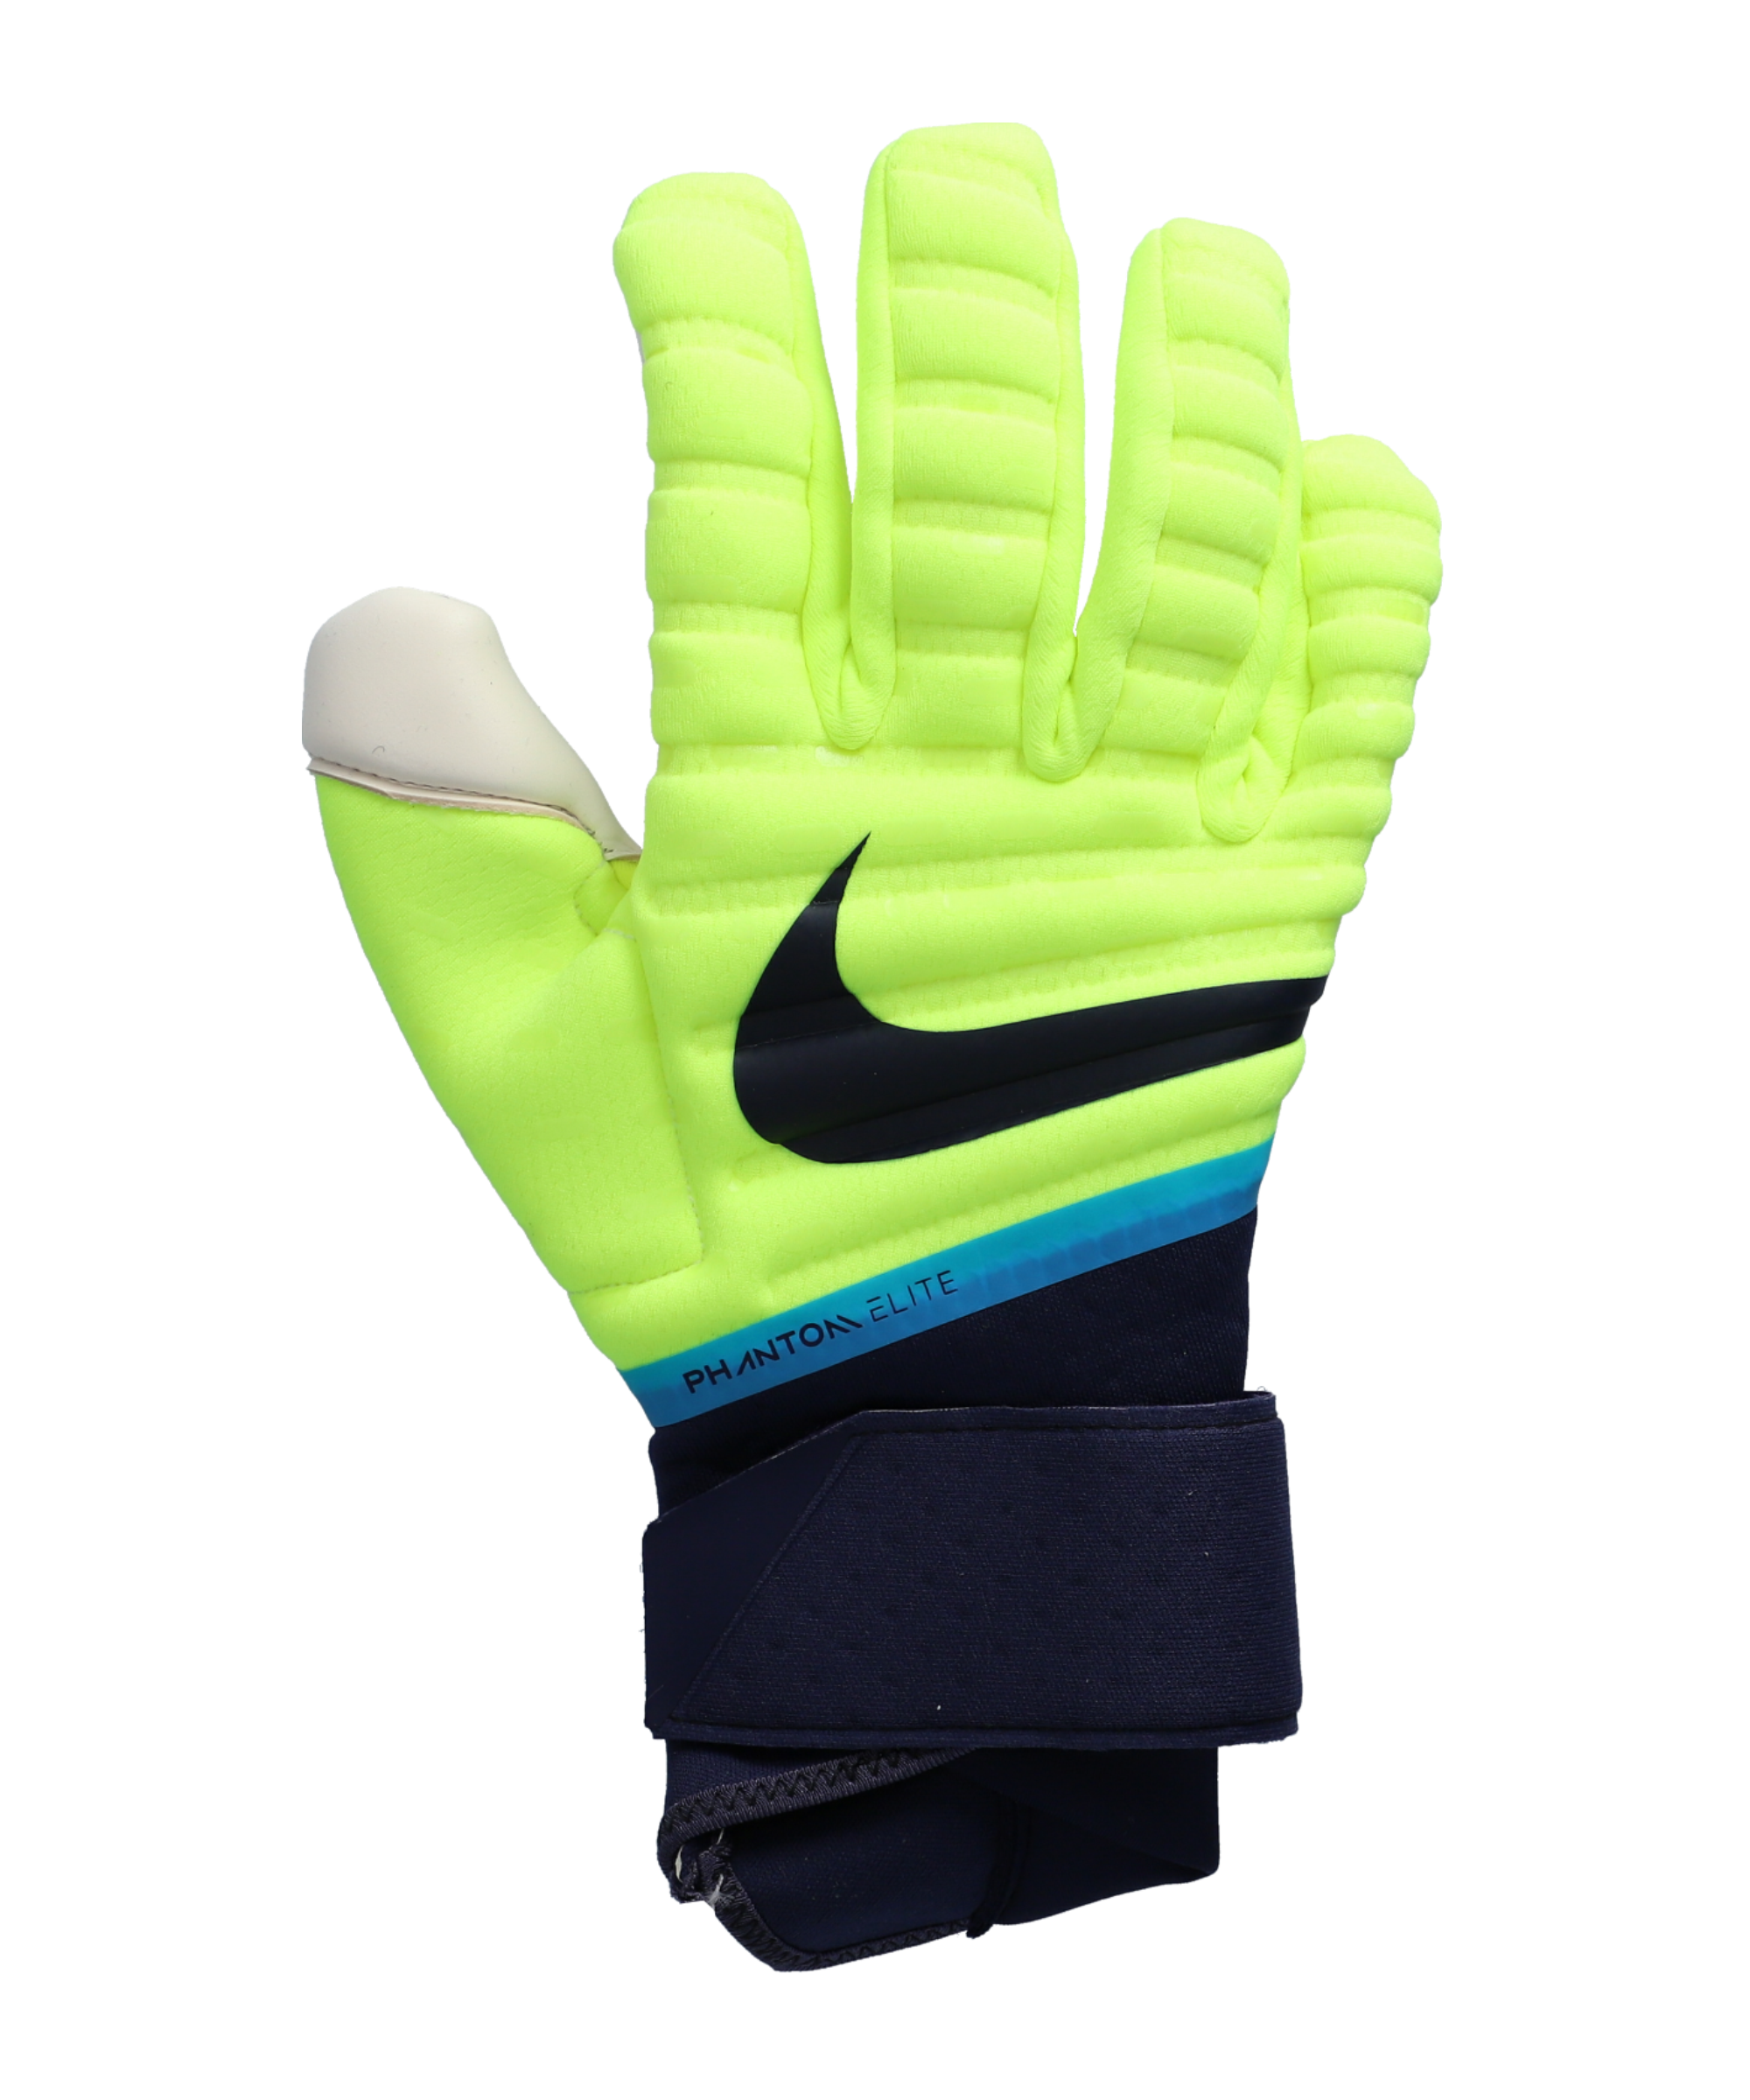 Keepers handschoenen Nike Phantom Elite Promo